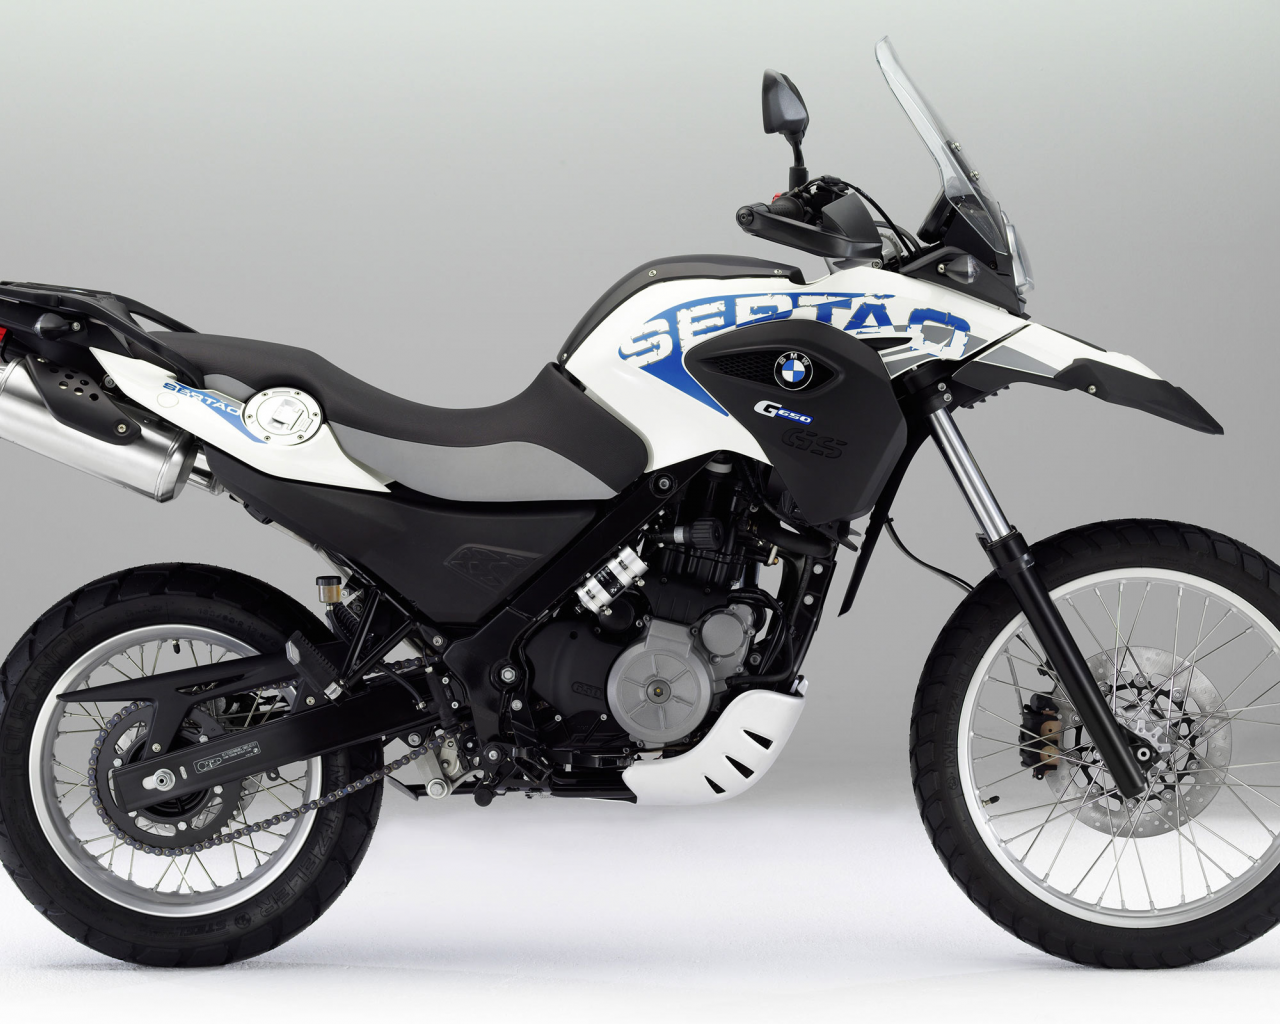 G 650 GS, moto, Enduro - Funduro, G 650 GS 2012, мото, мотоциклы, BMW, motorcycle, motorbike